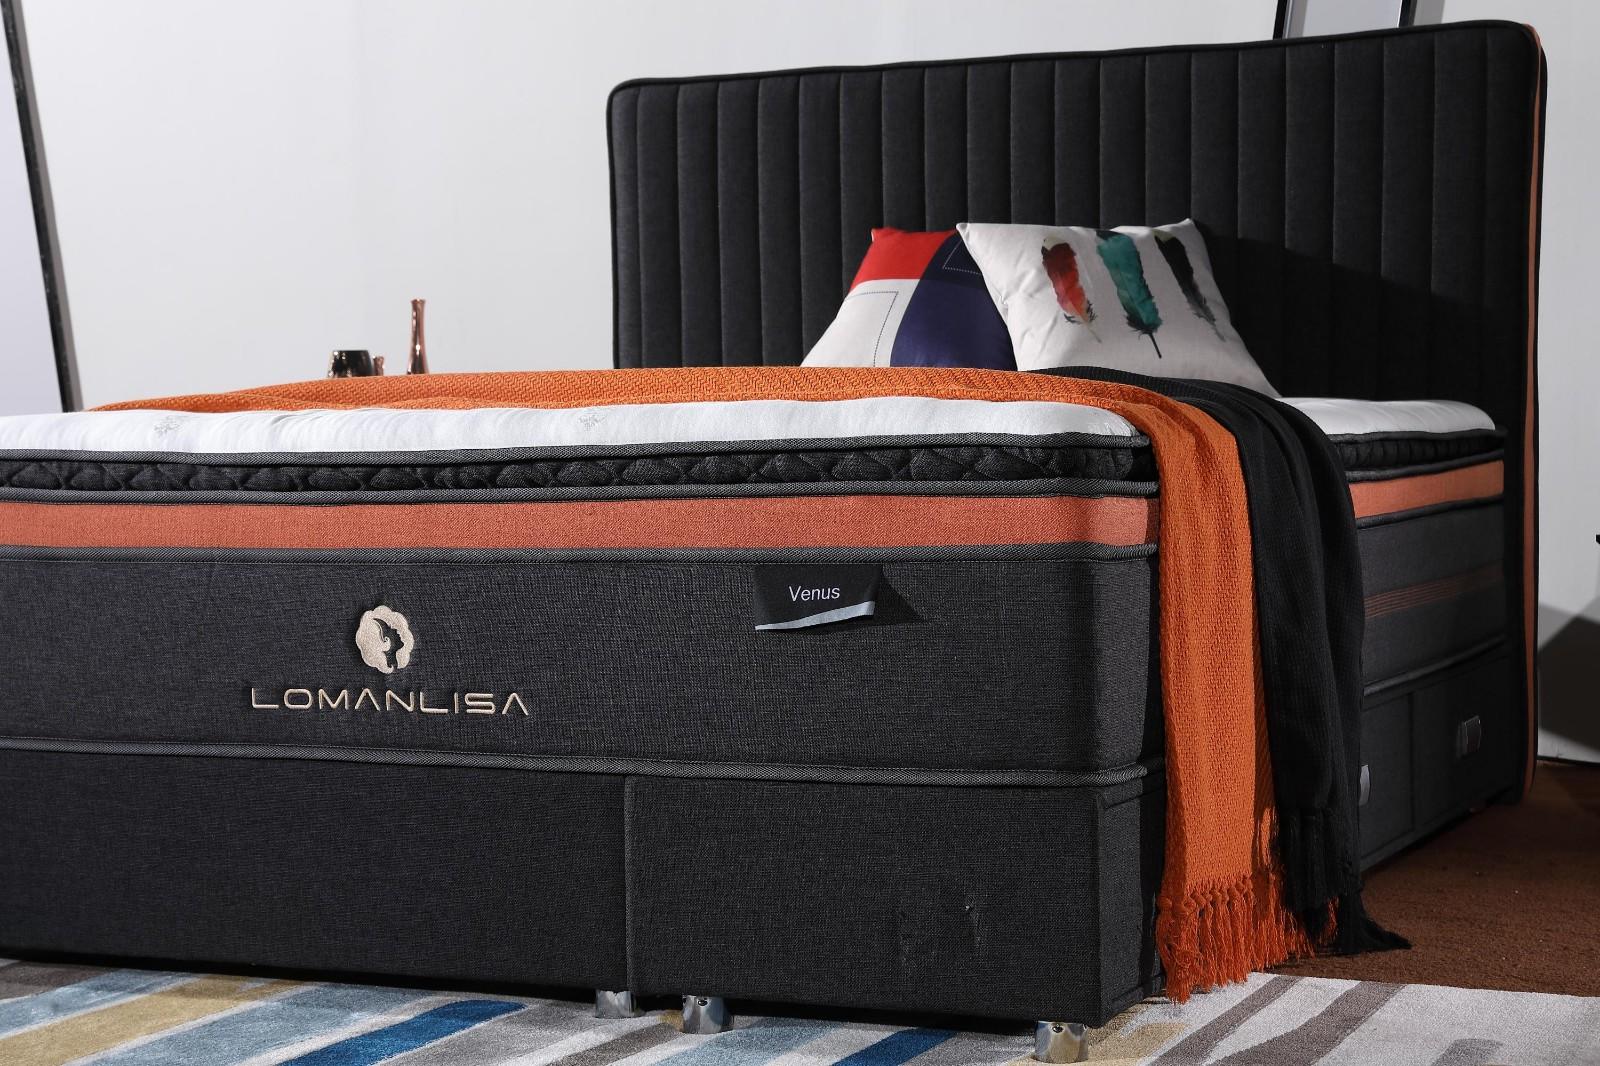 JLH zoned japanese futon mattress cost for tavern